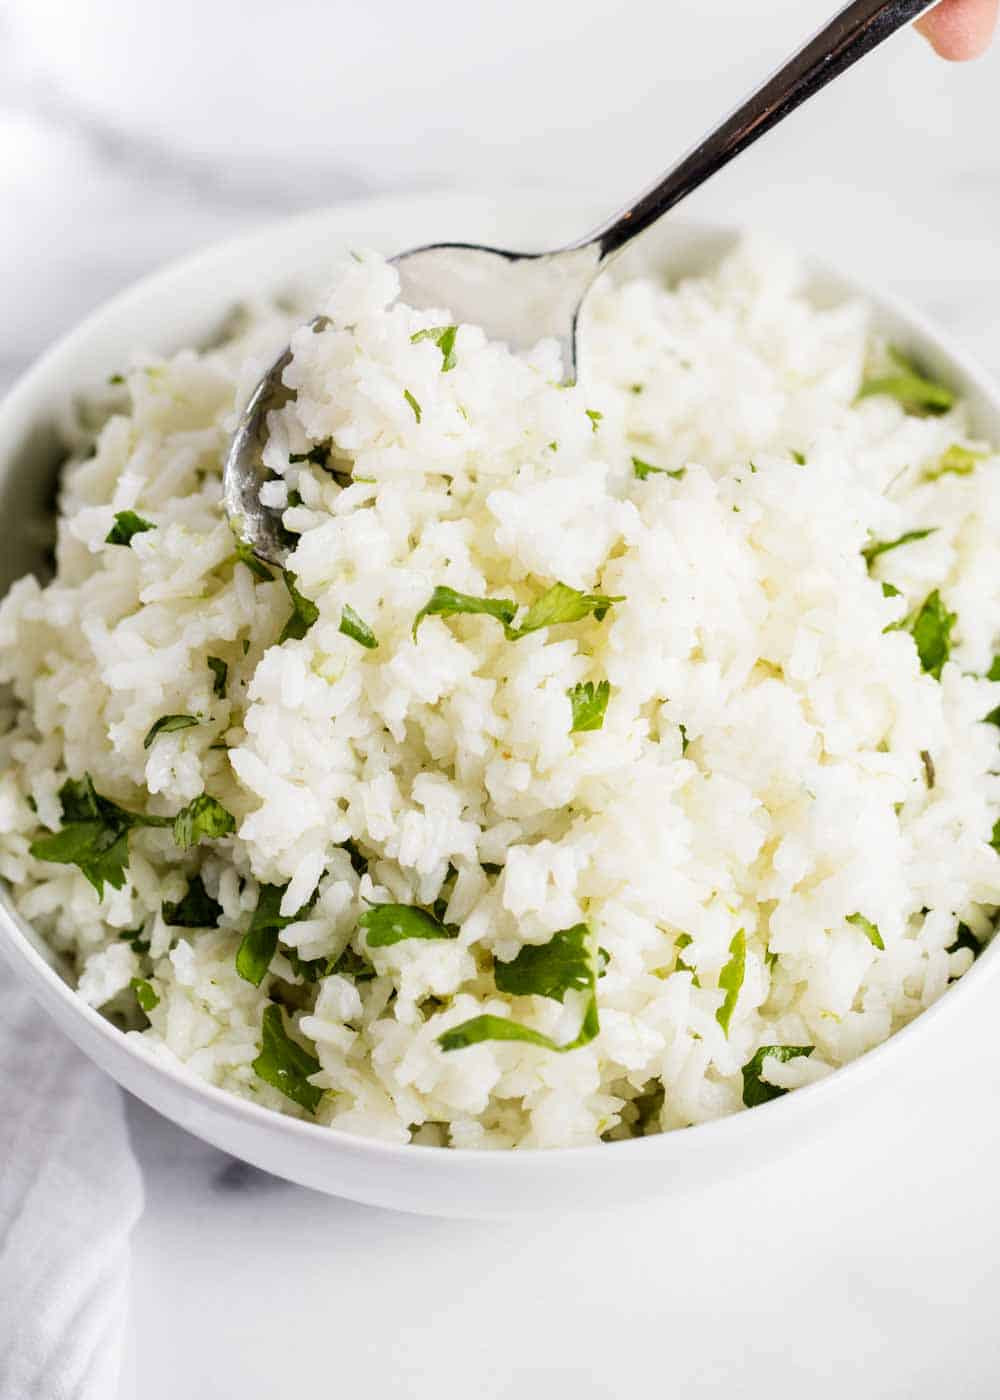 Qdoba Mexican Eats Cilantro Lime Rice
 Cilantro Lime Rice Recipe With images